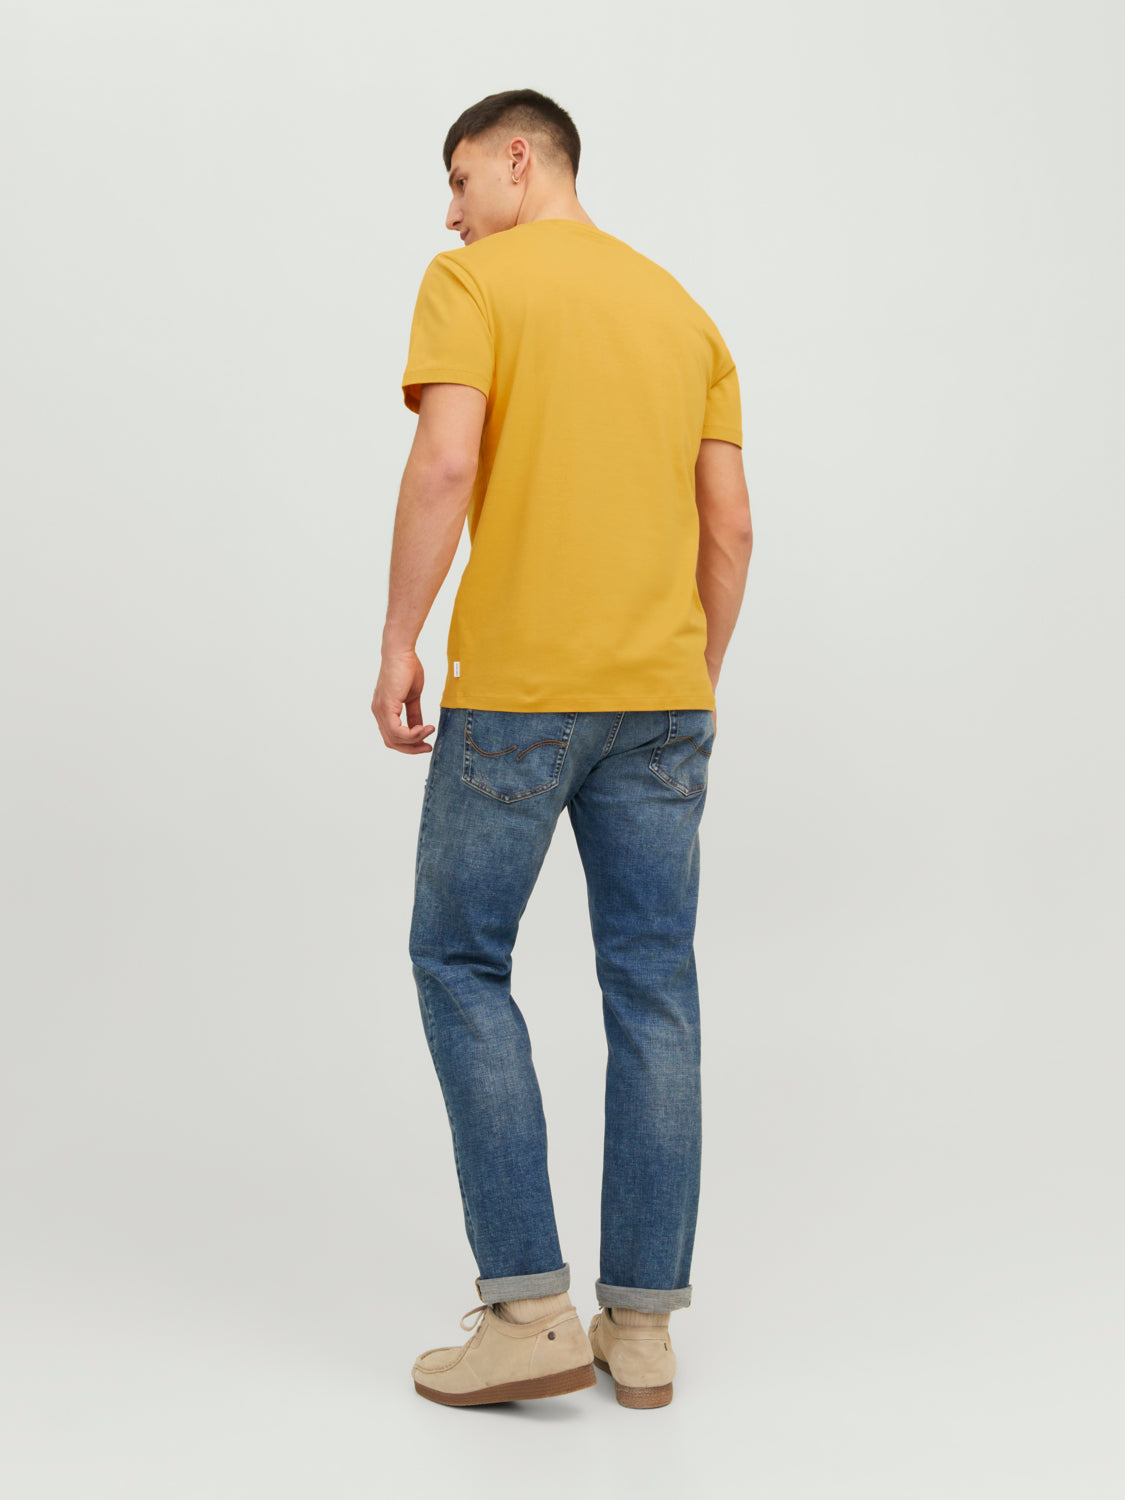 Camiseta básica manga corta amarilla - JJEORGANIC